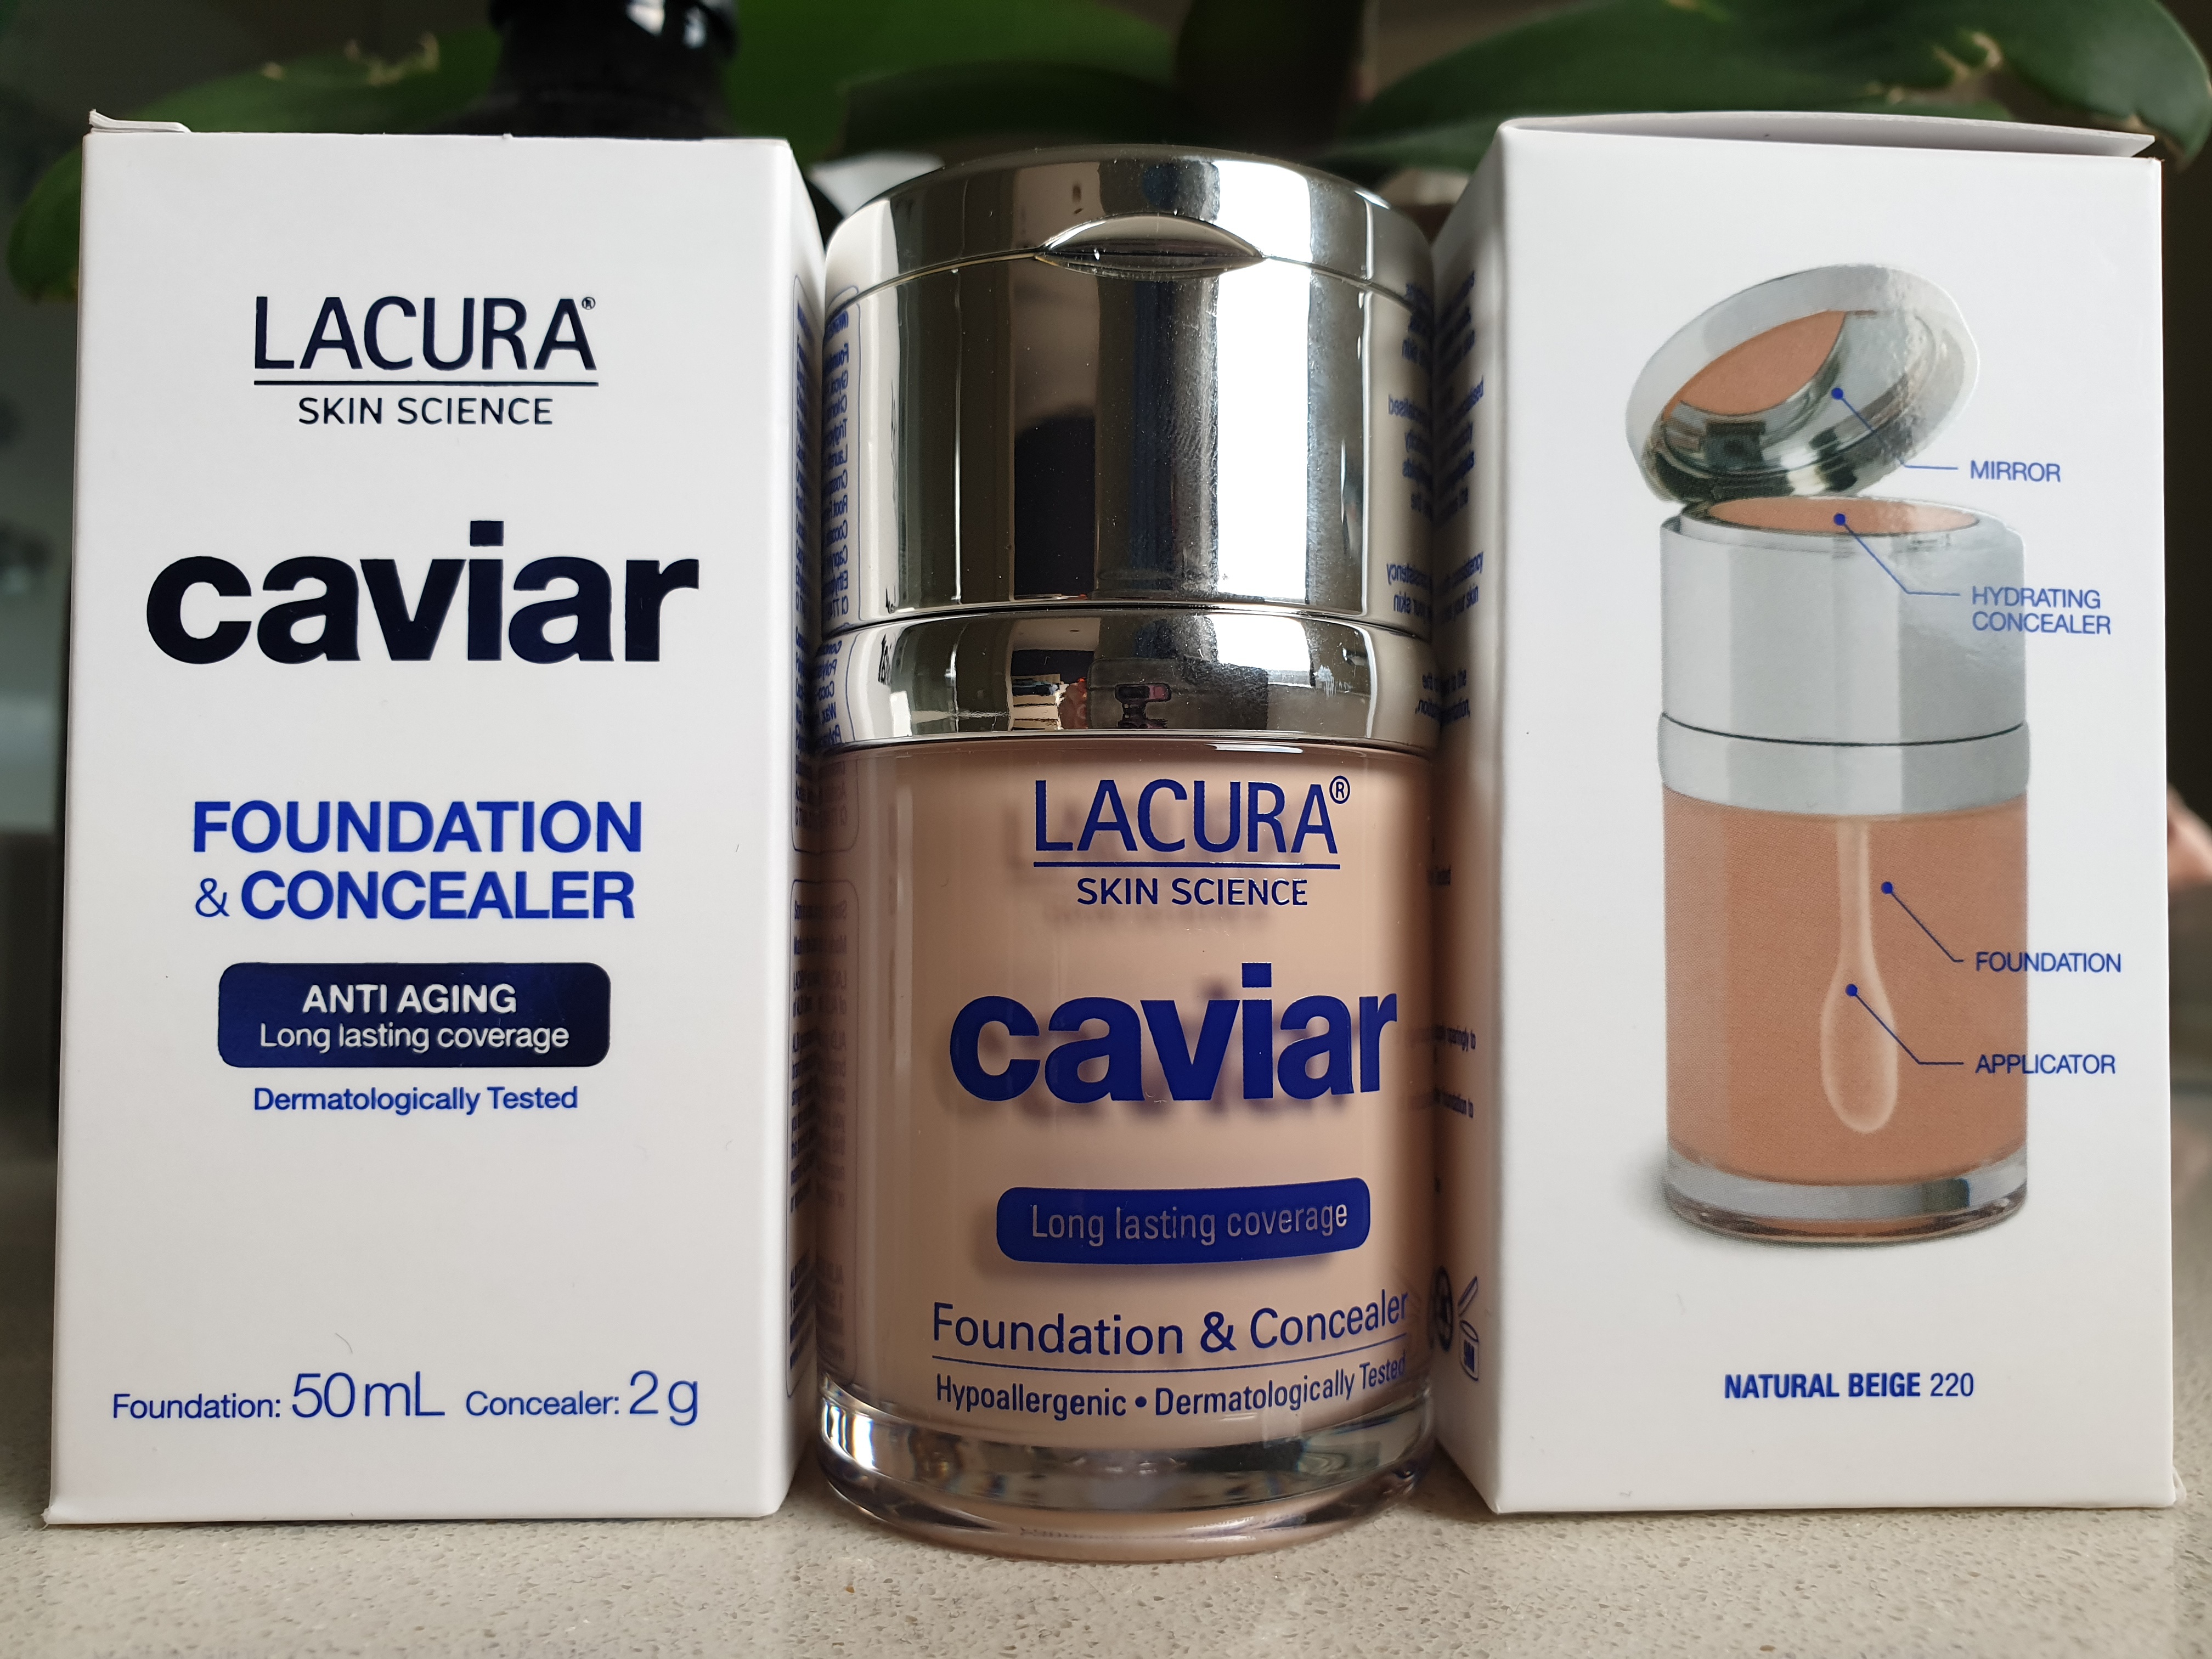 LACURA Caviar Foundation And Concealer